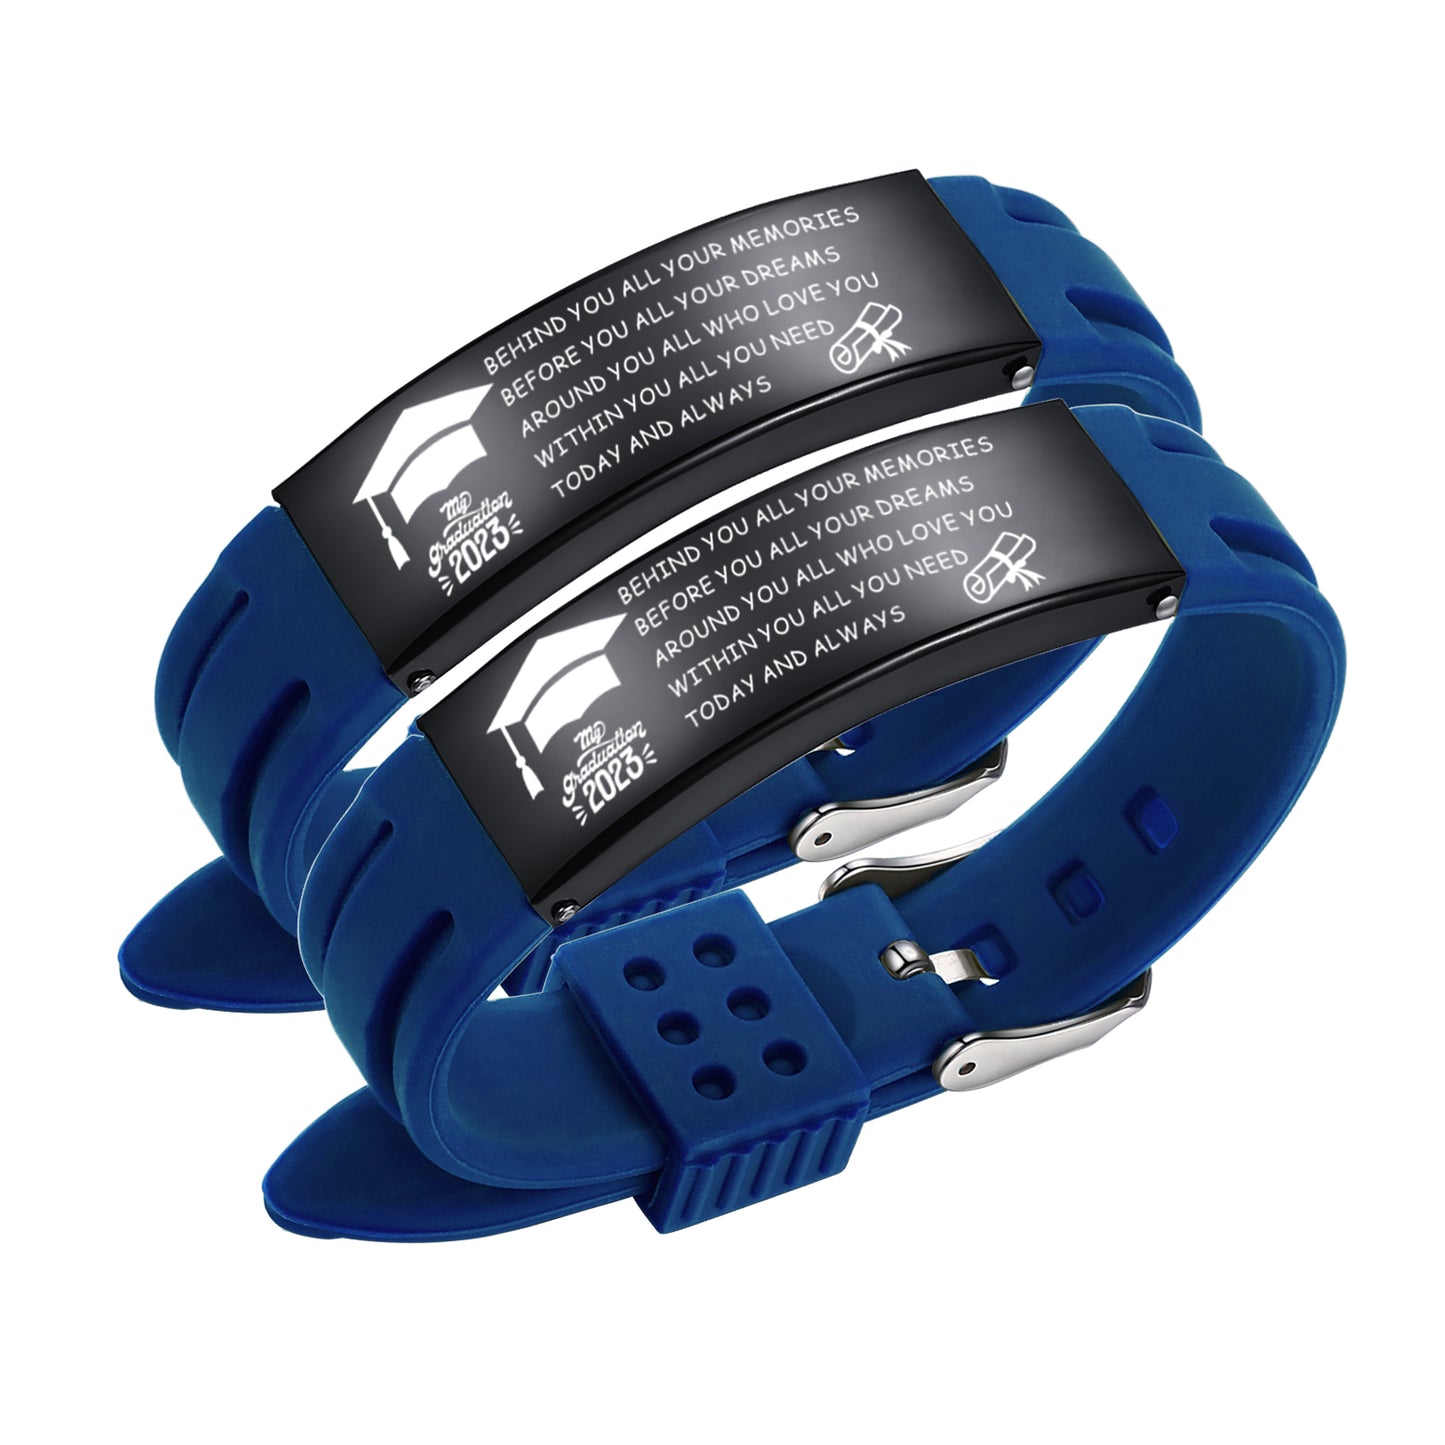 2023 Unique Graduation Gifts for him,Personalized Graduation Bracelets-Sport Silicone Stainless Steel inspirational Bracelets